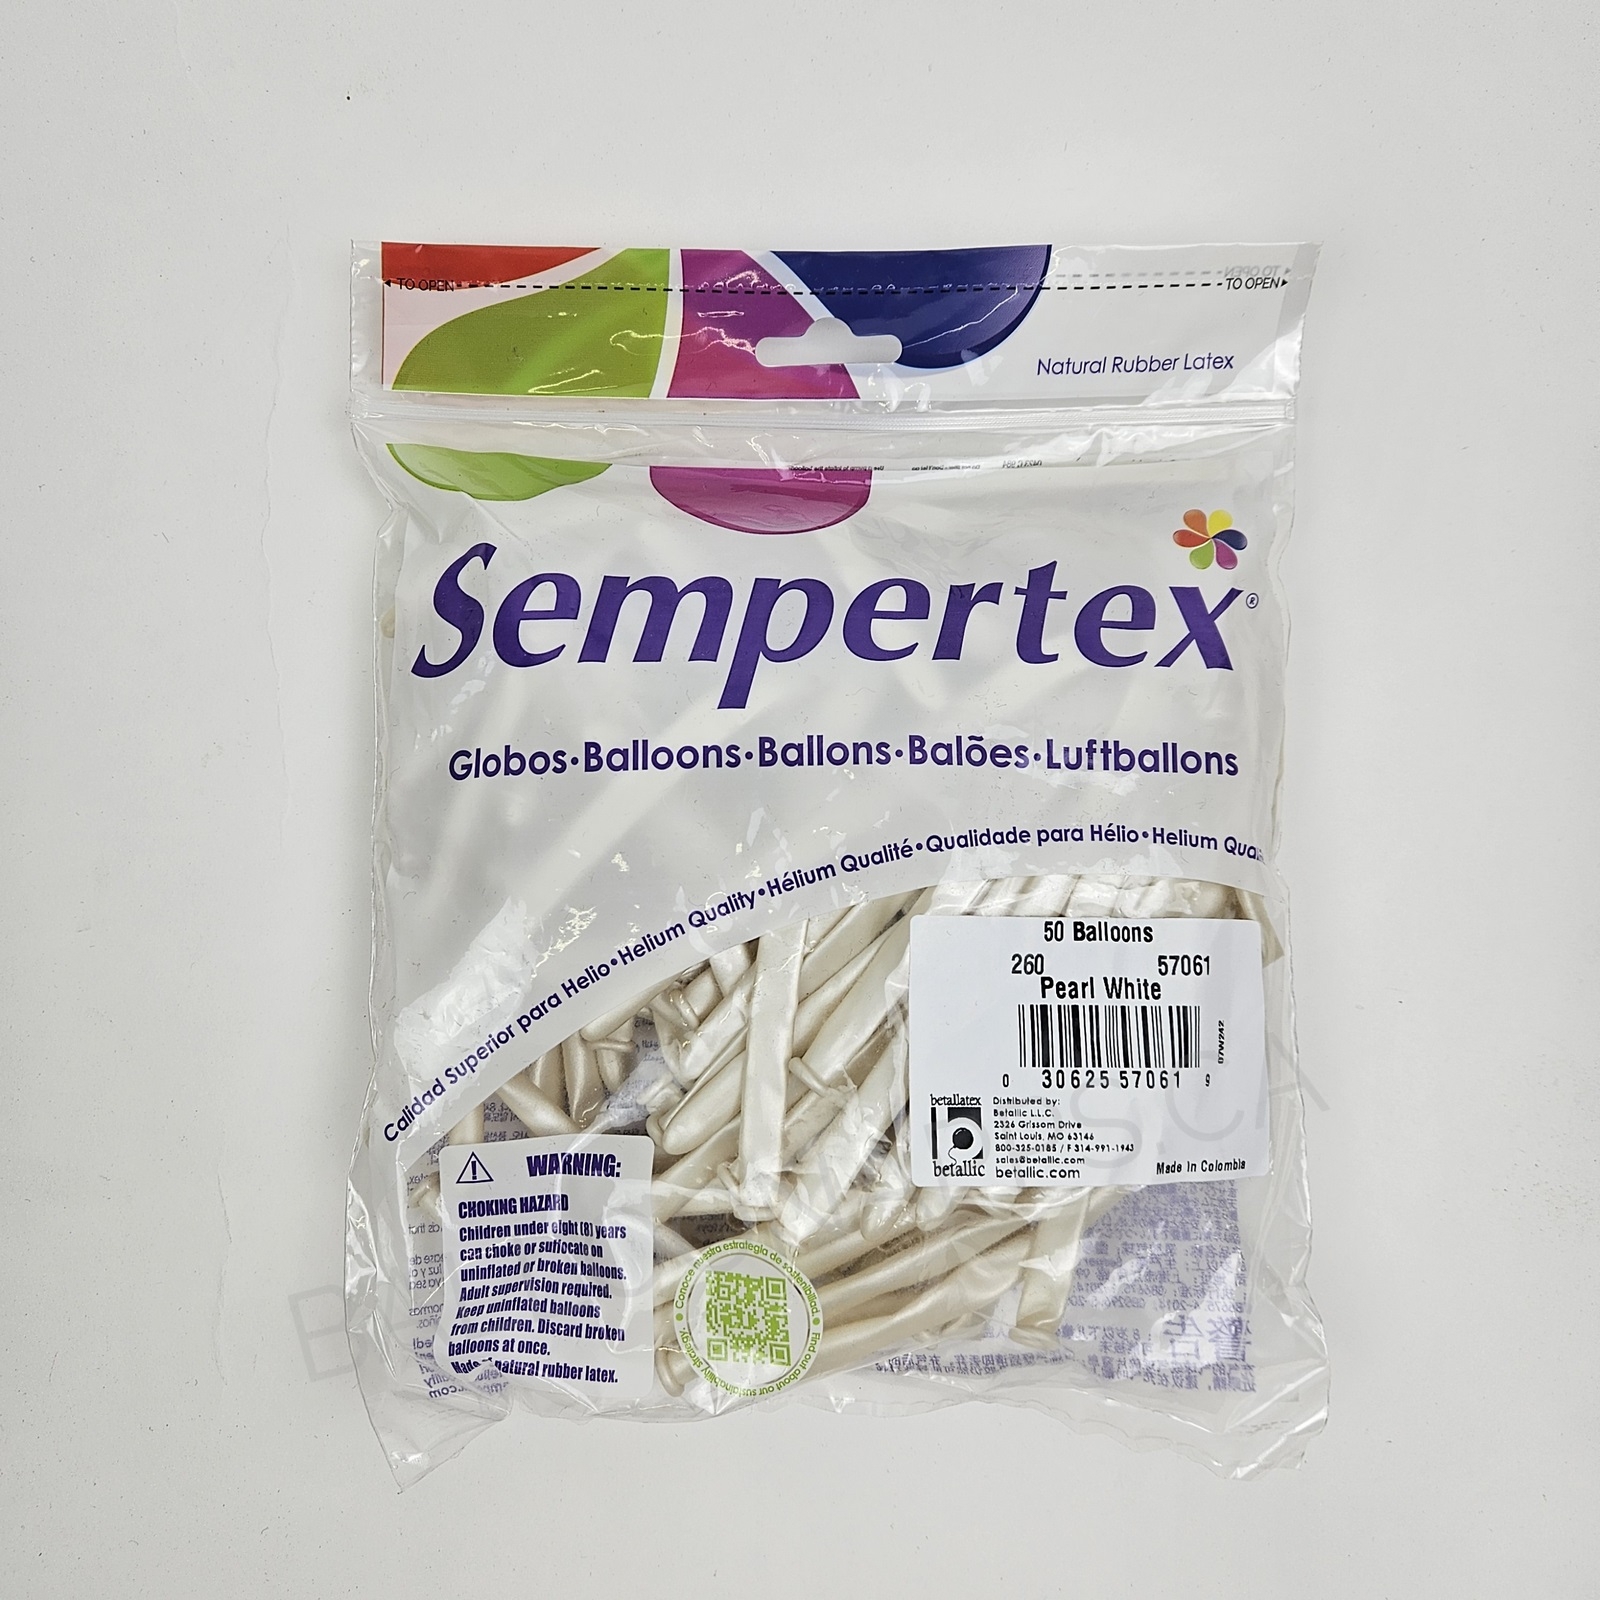 Sempertex 260 Pearl White